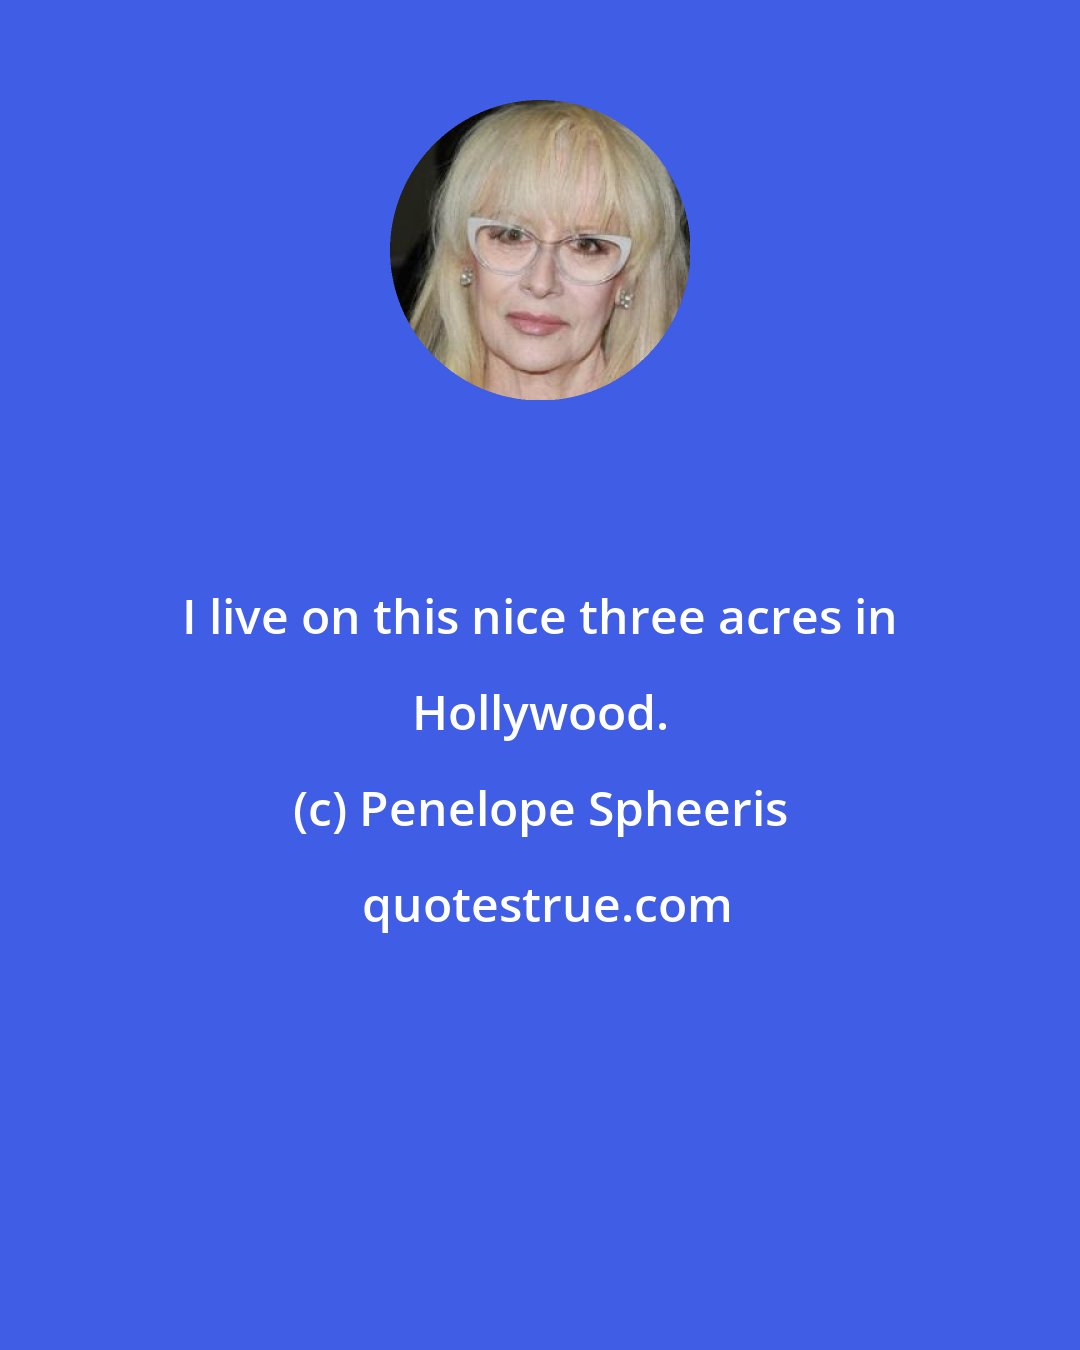 Penelope Spheeris: I live on this nice three acres in Hollywood.